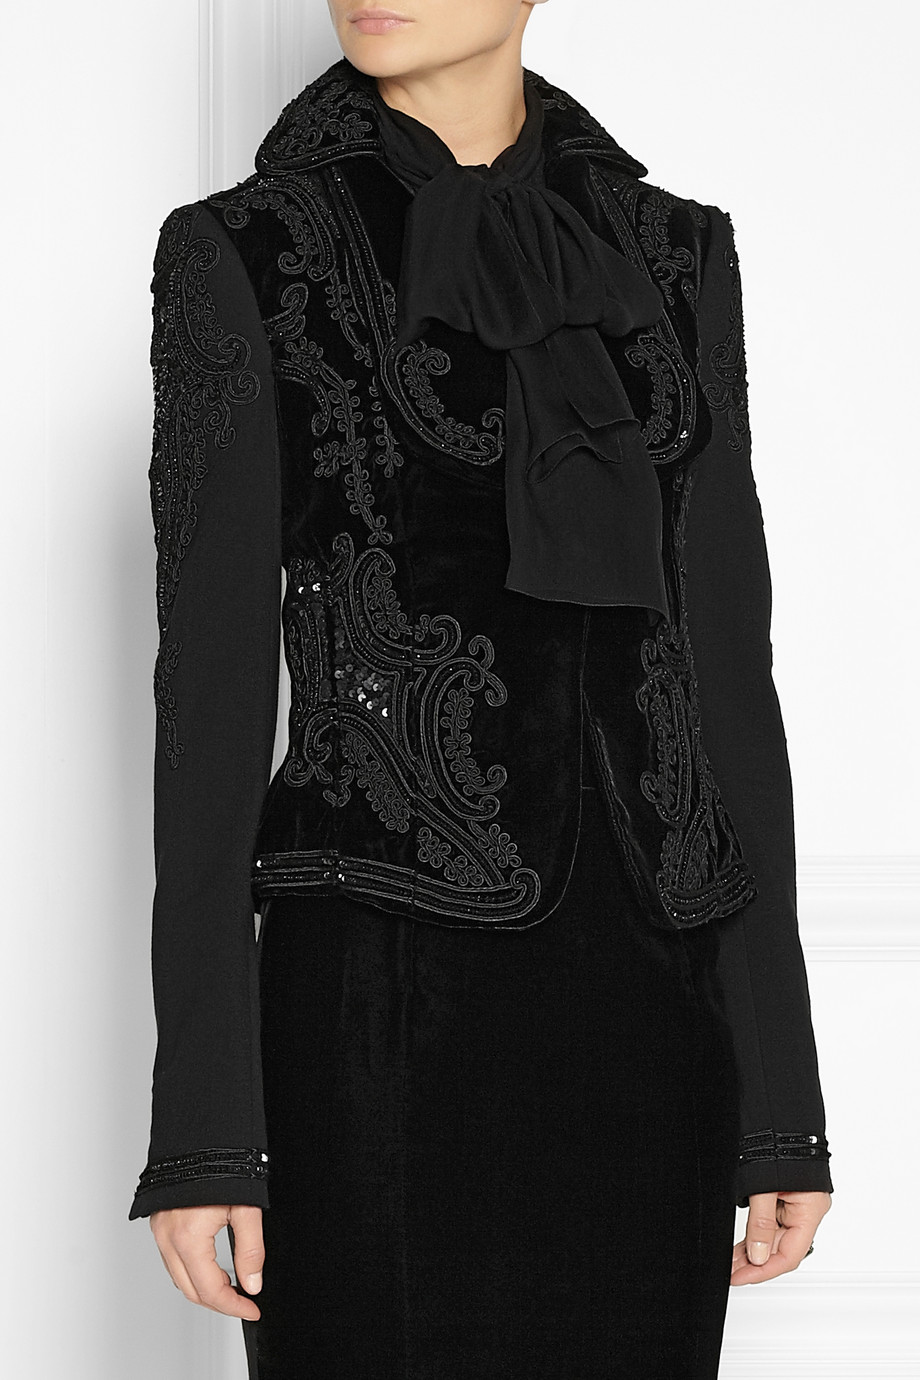 Lyst - L'wren scott Embellished Jersey Sleeved Velvet Jacket in Black